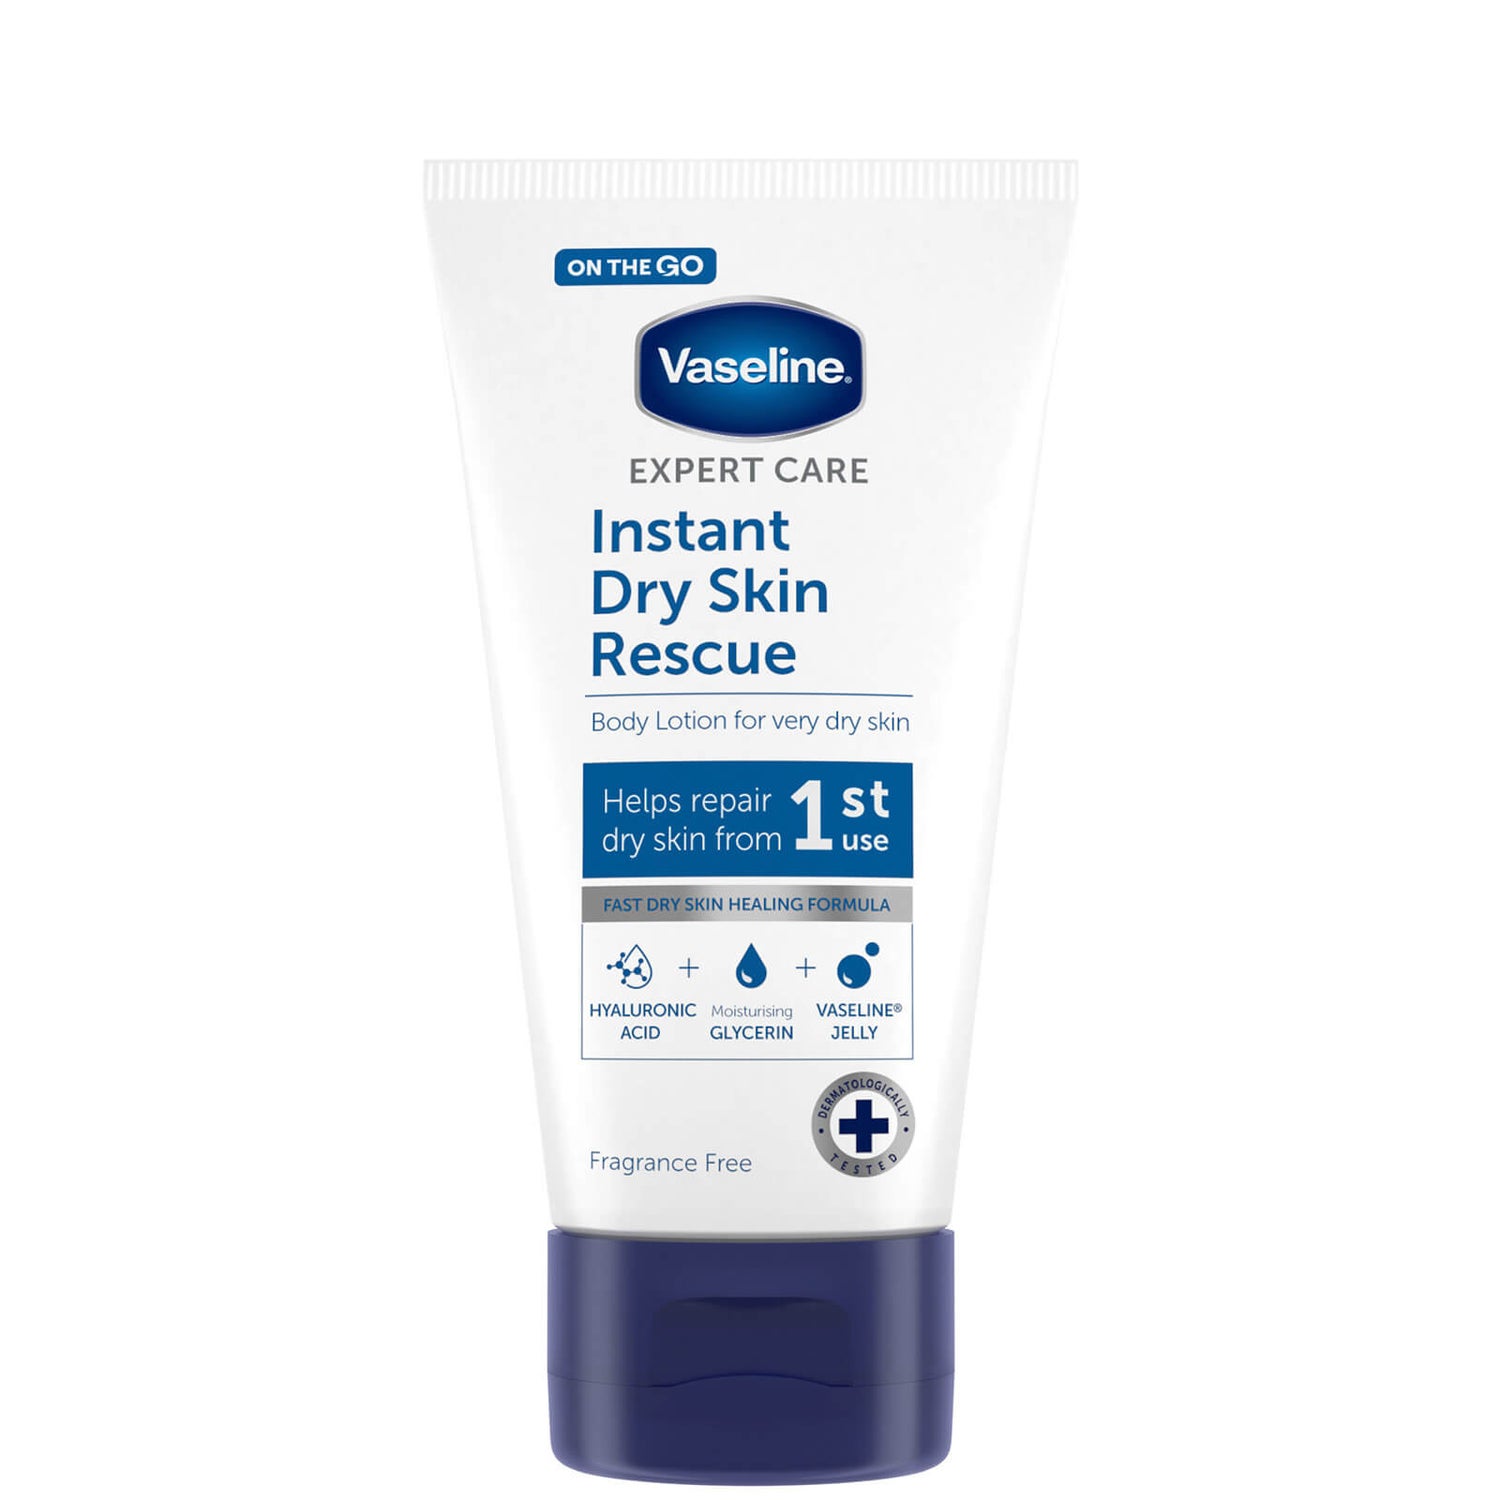 Vaseline Expert Care Instant Dry Skin Rescue On The Go 凡士林專家護理即時乾燥皮膚救援行動